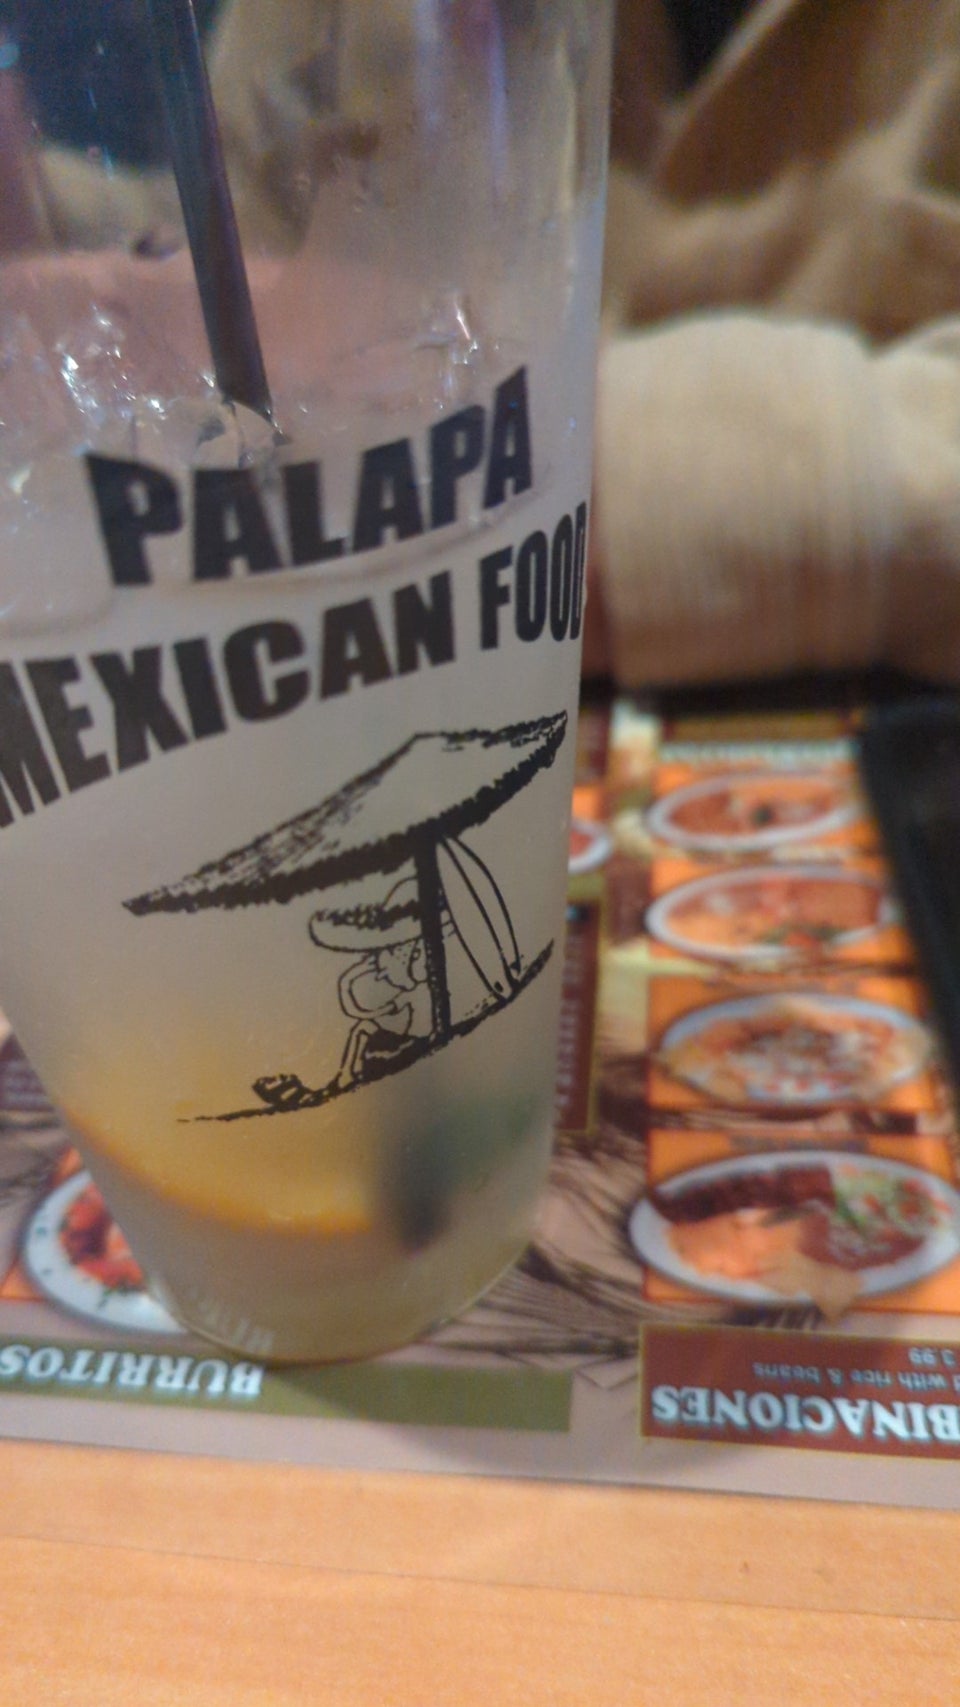 Palapa Mexican Food